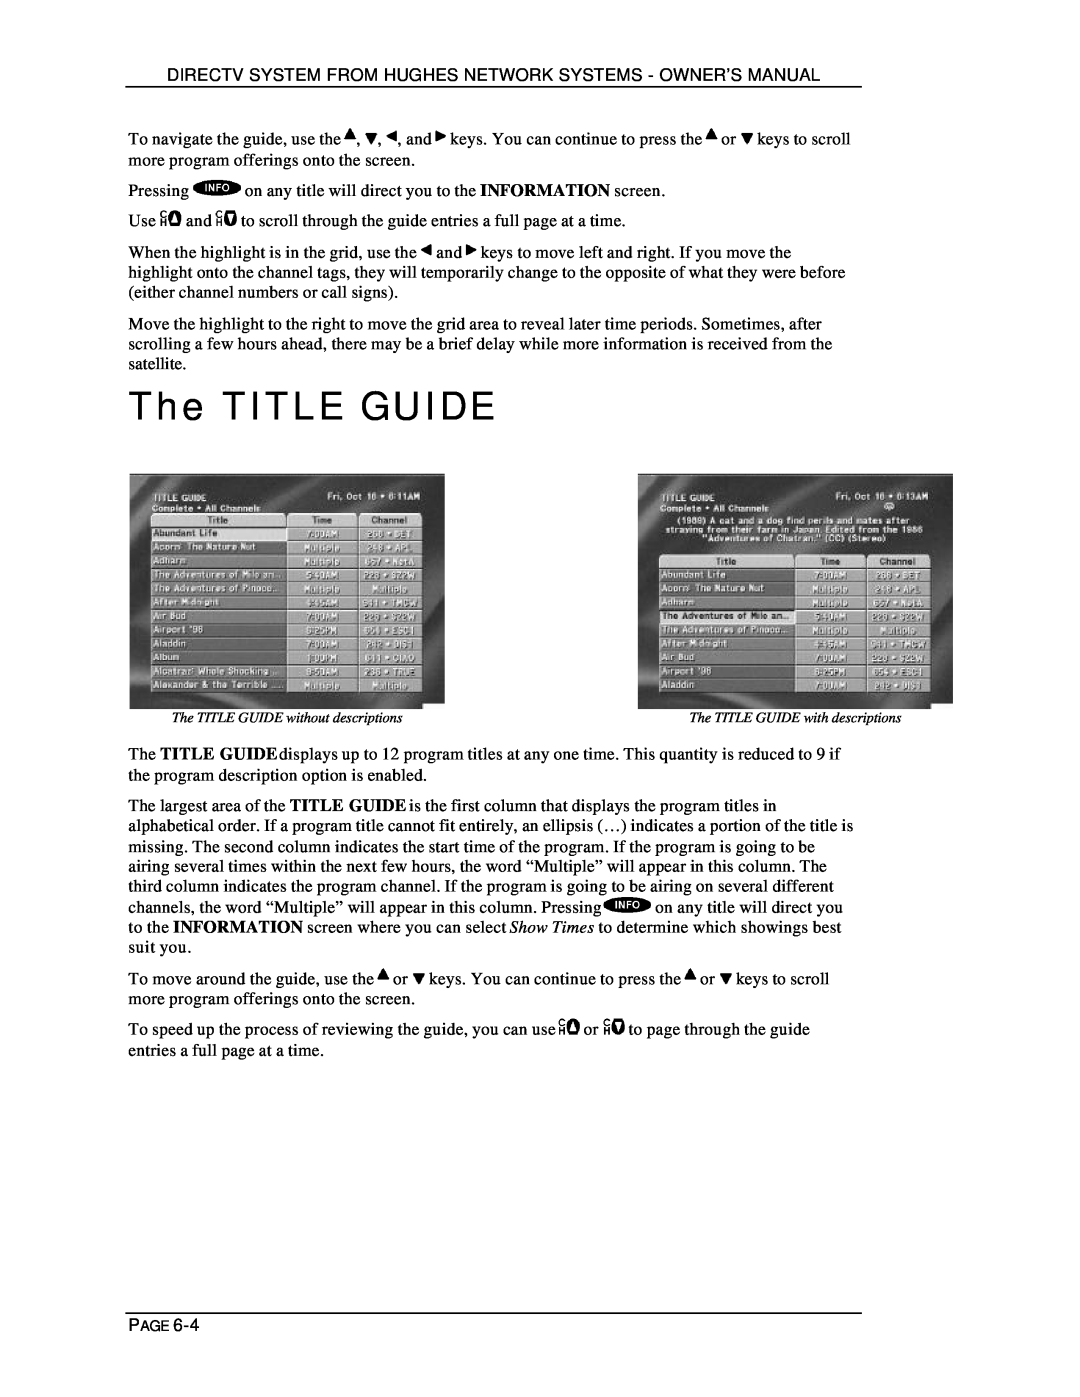 DirecTV HIRD-D01, HIRD-D11 owner manual The TITLE GUIDE without descriptions 